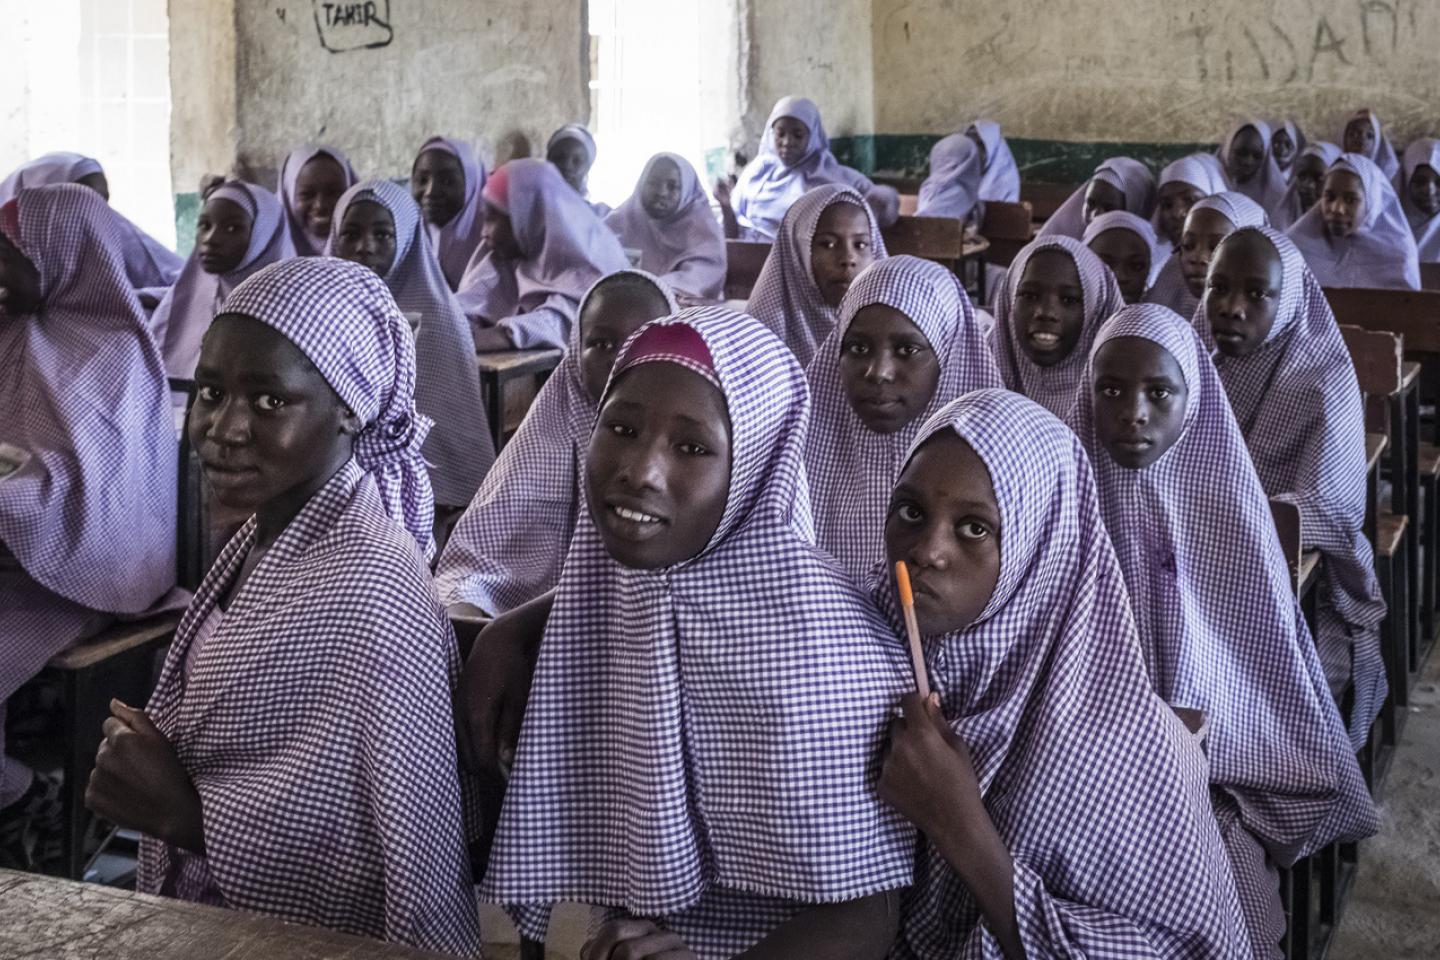 UK, UNICEF partner to improve girl education in Nigeria